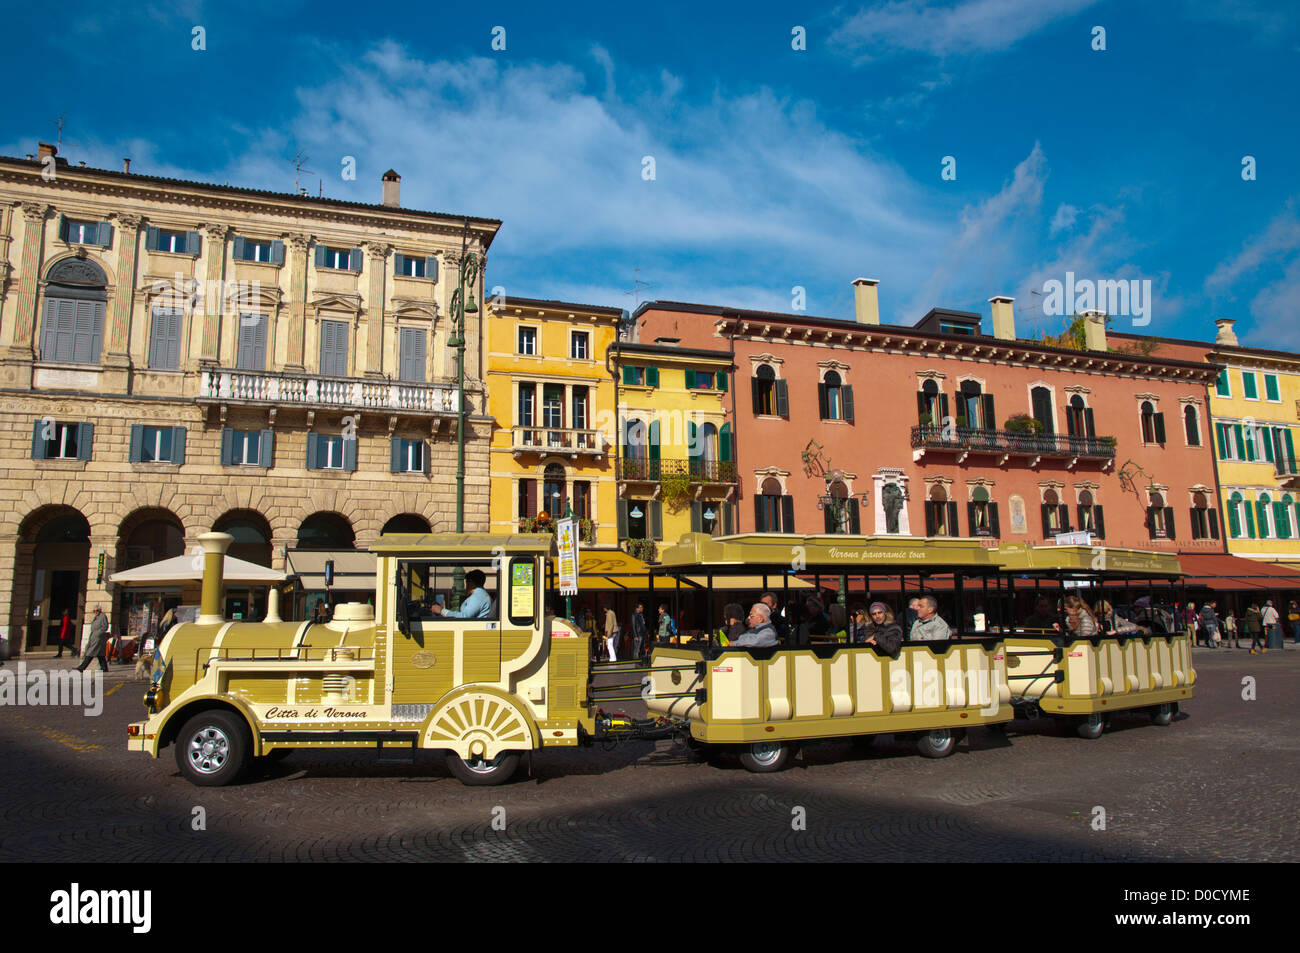 Tourist sightseeing train Piazza Bra square central Verona city the Veneto region northern Italy Europe Stock Photo